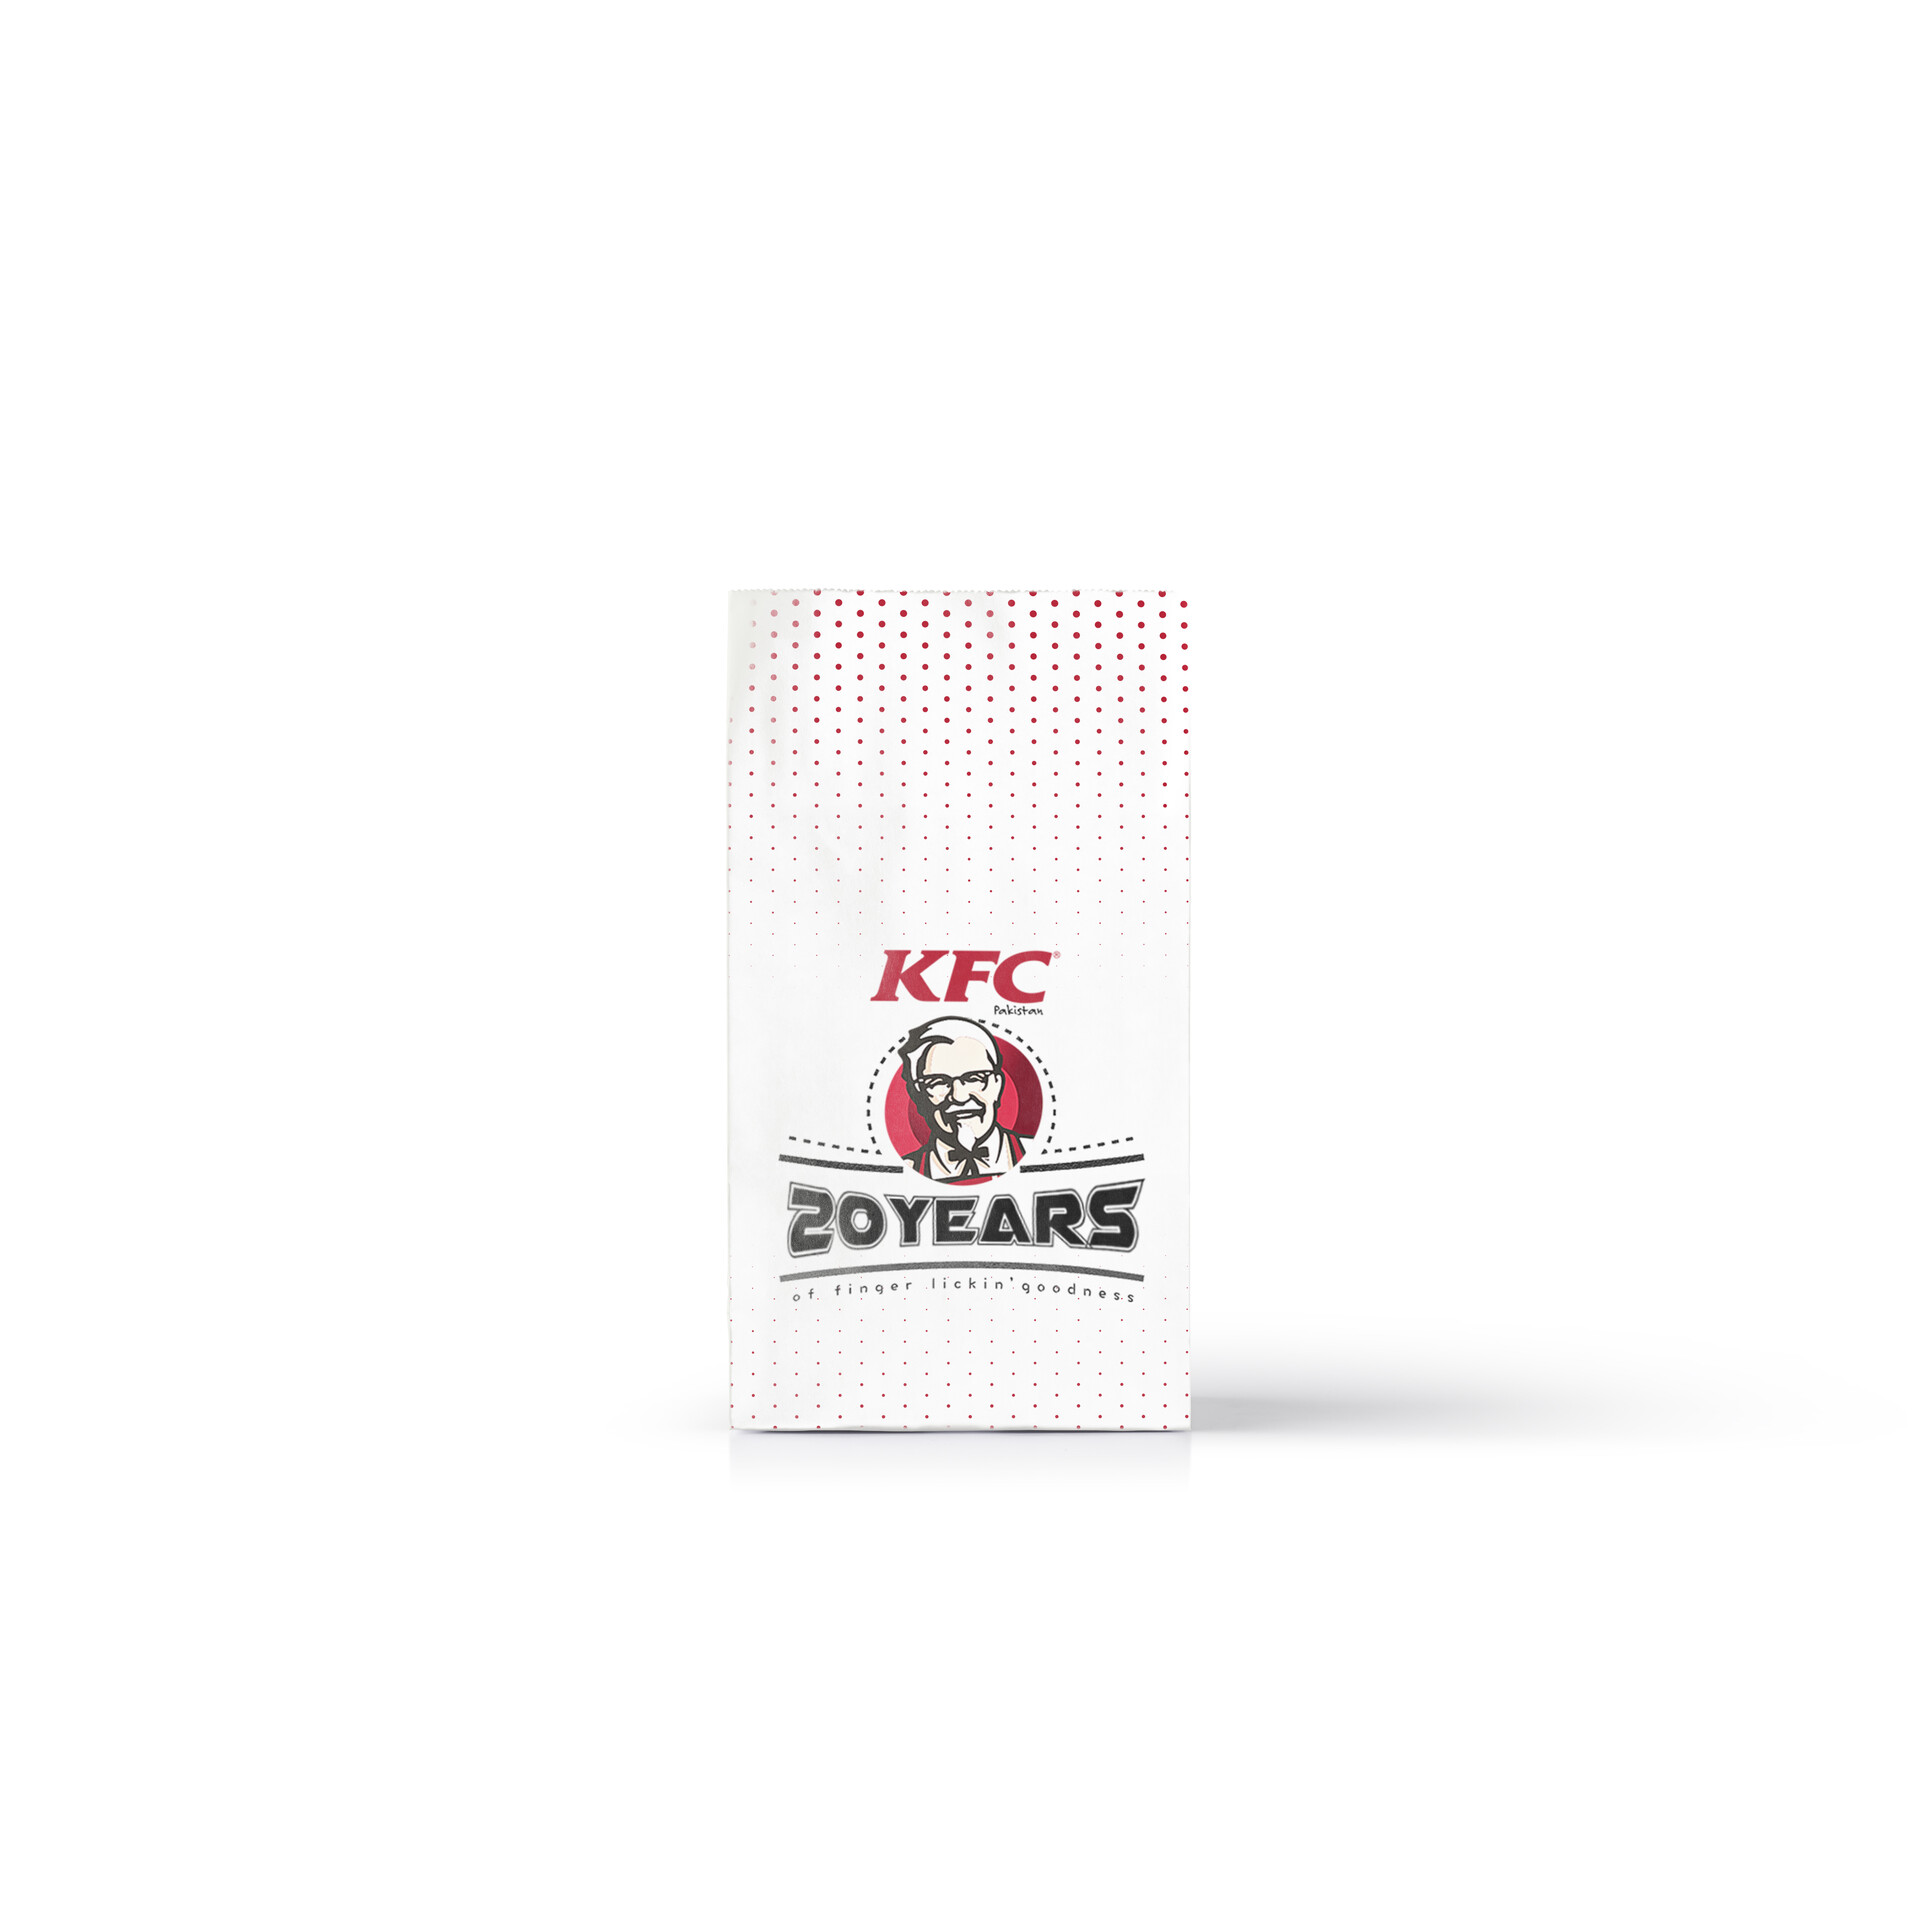 Download Artstation Kfc 20 Years Celebration Campaign Logo Design Key Visuals Branding Print Campaign Mohammad Nidal Khan